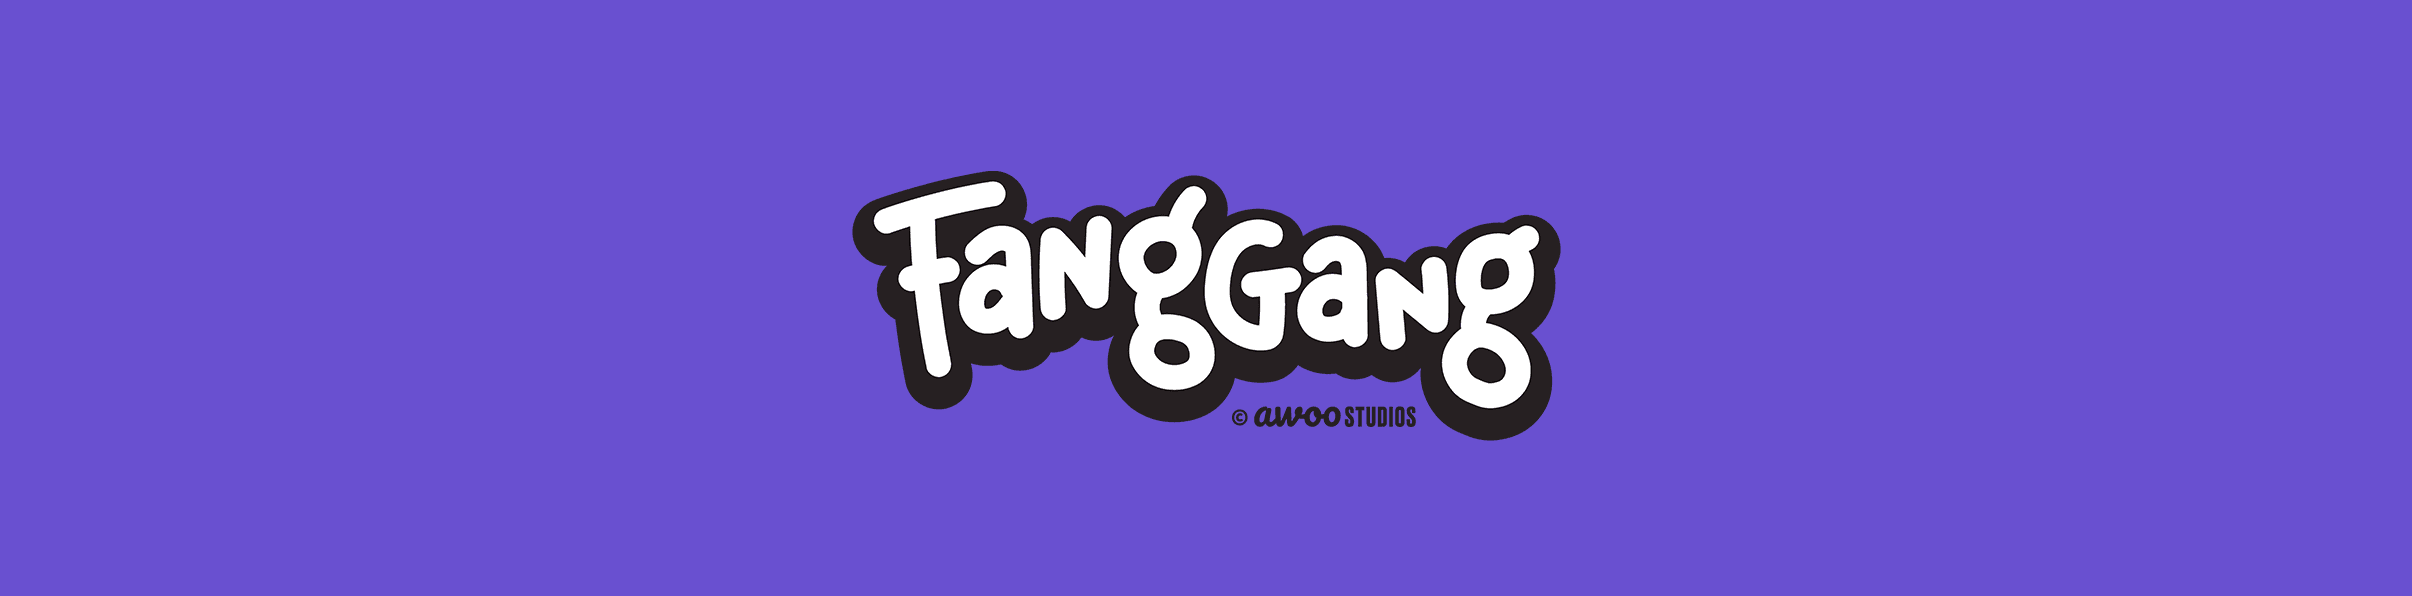 FangGang banner